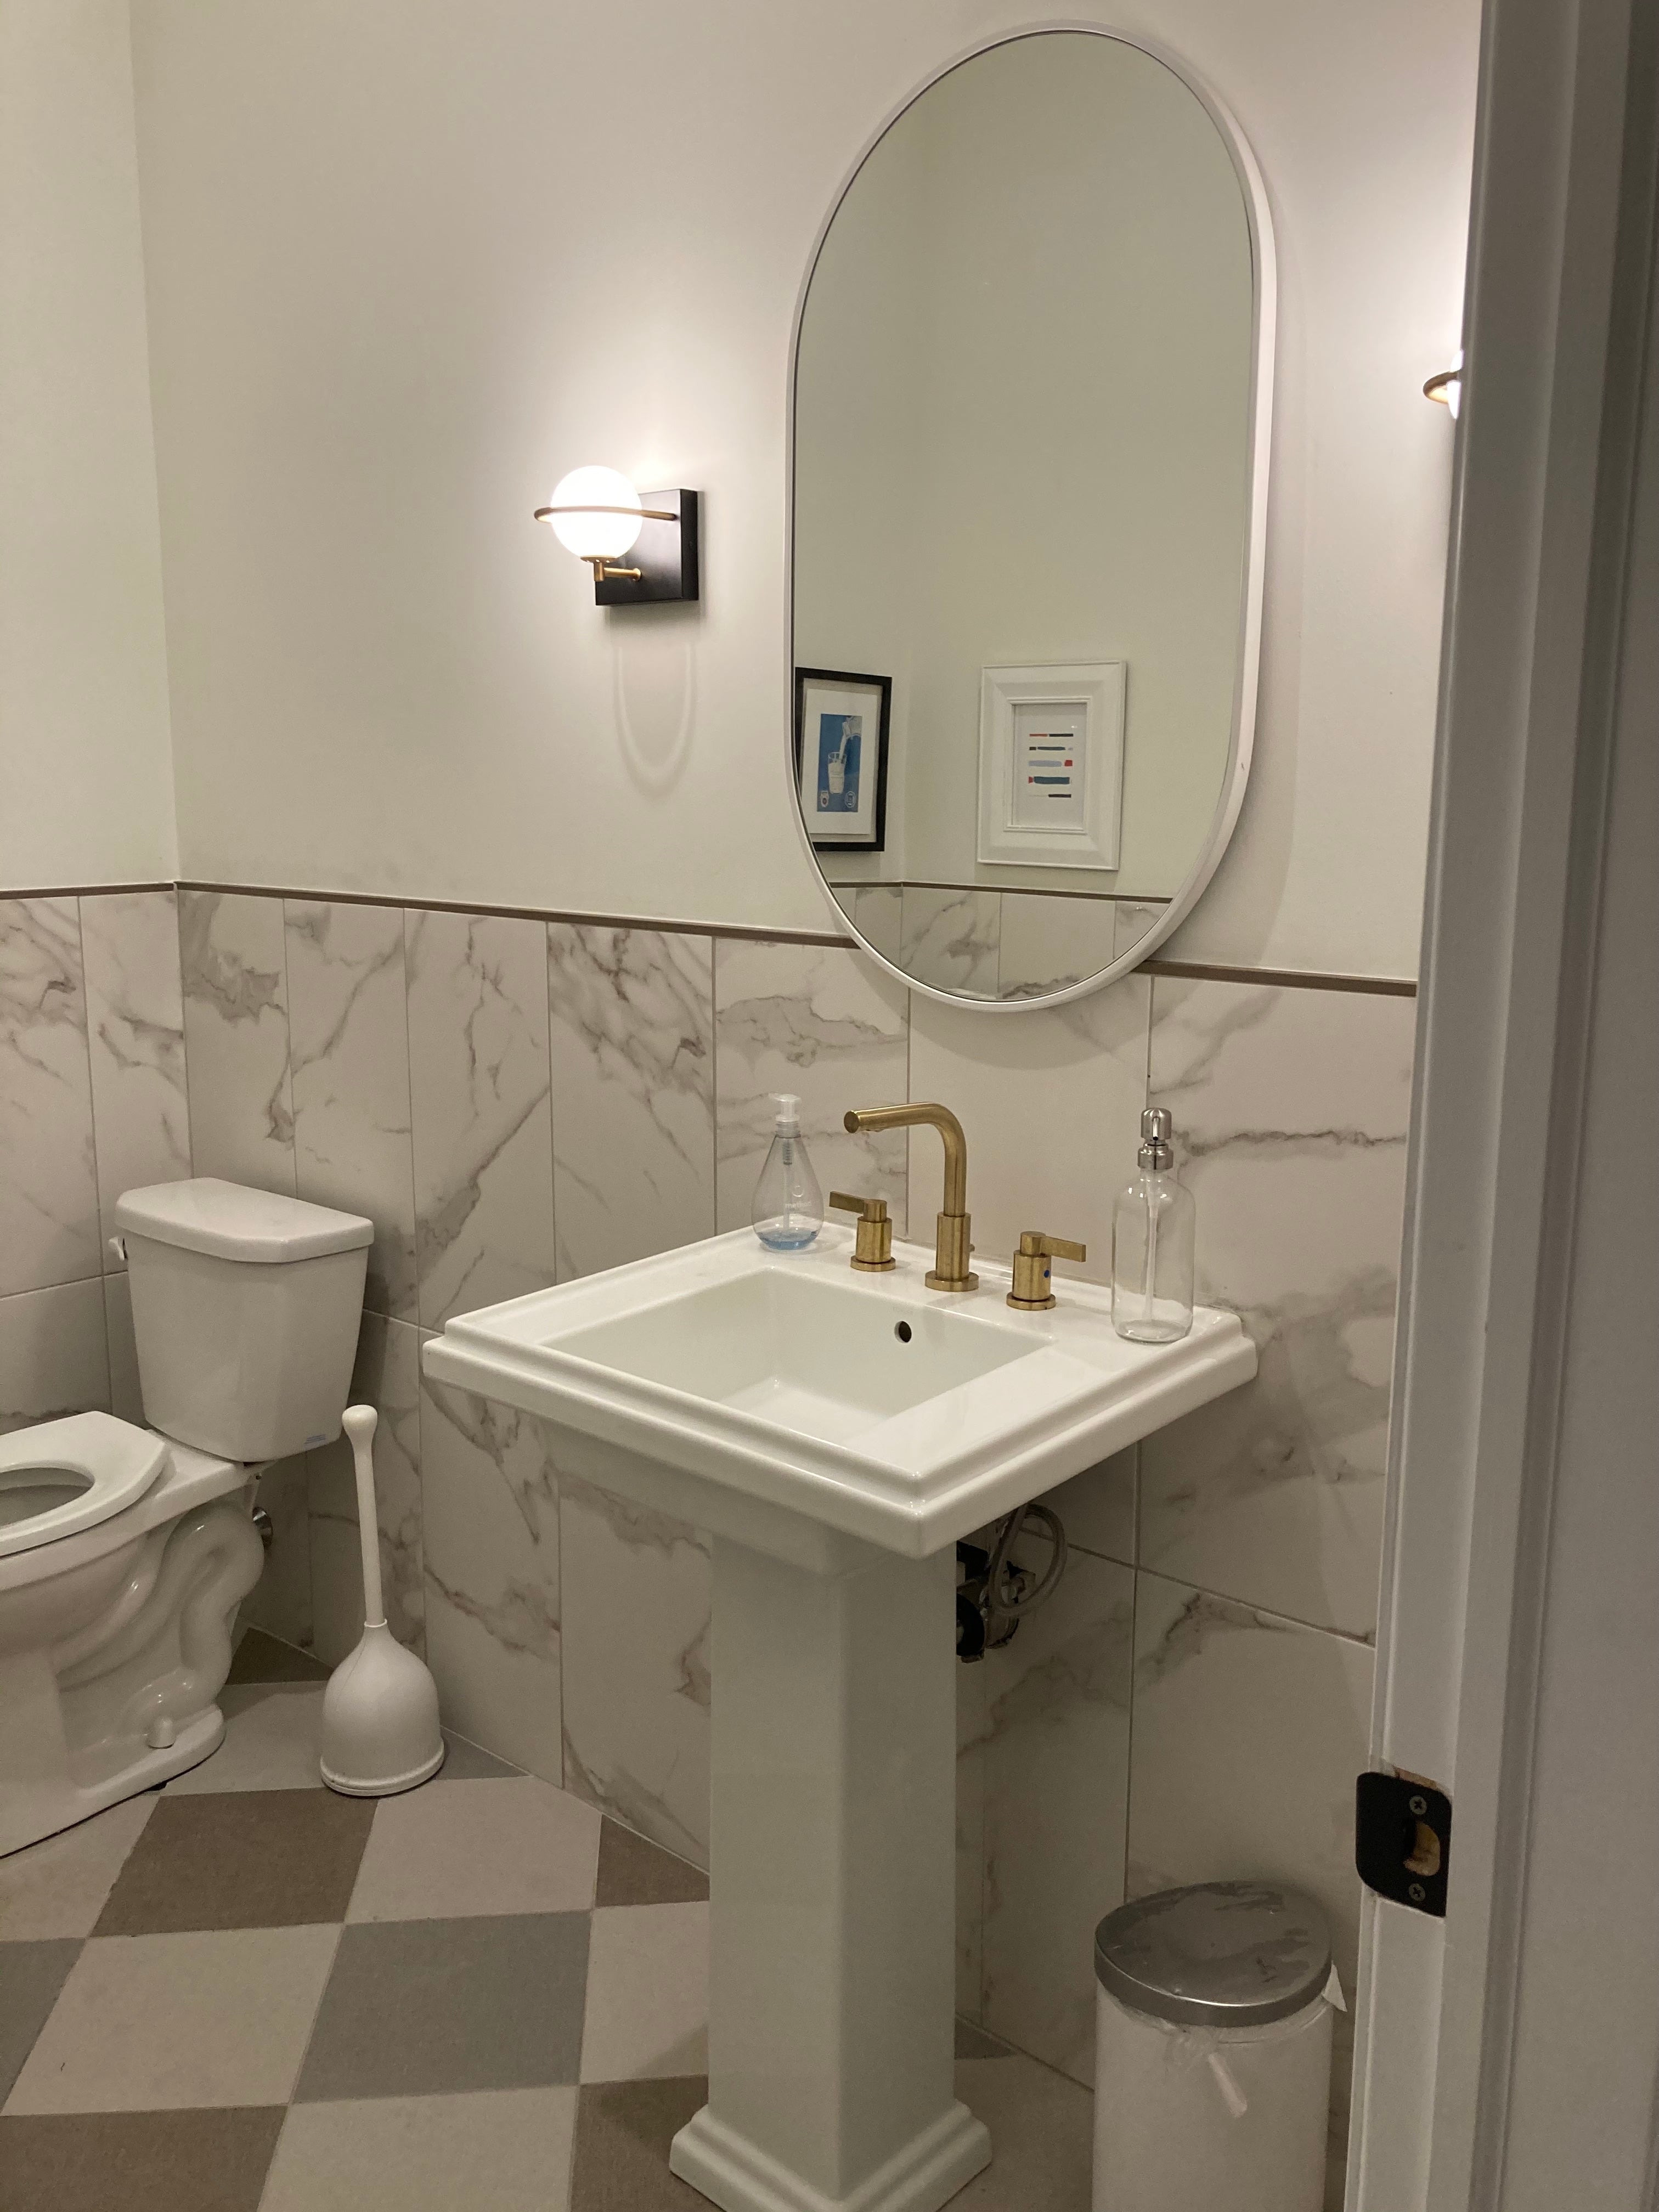 Office Bathroom Design Ideas - 26 Pictures | 1stDibs